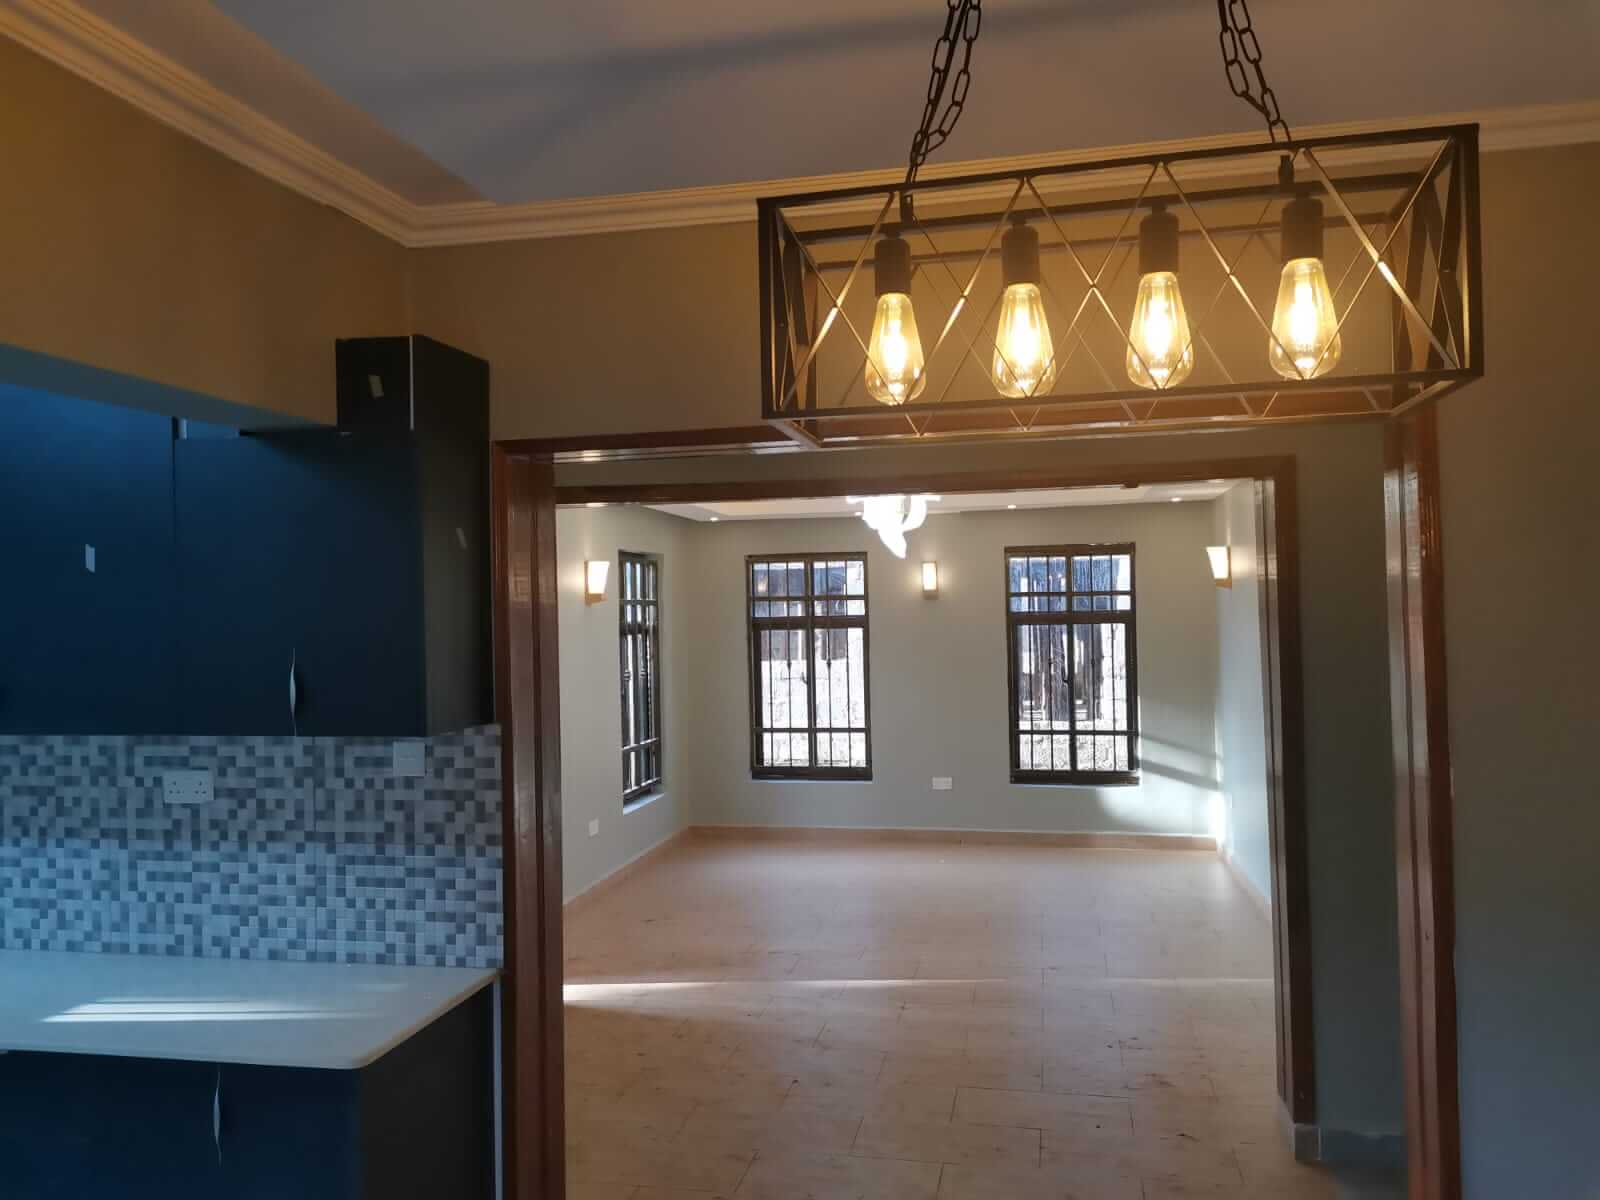 Amazing Brand New Dubai Style 3 Bedroom Homes For Sale at Karura Ridge Estate in Denderu-Limuru Road